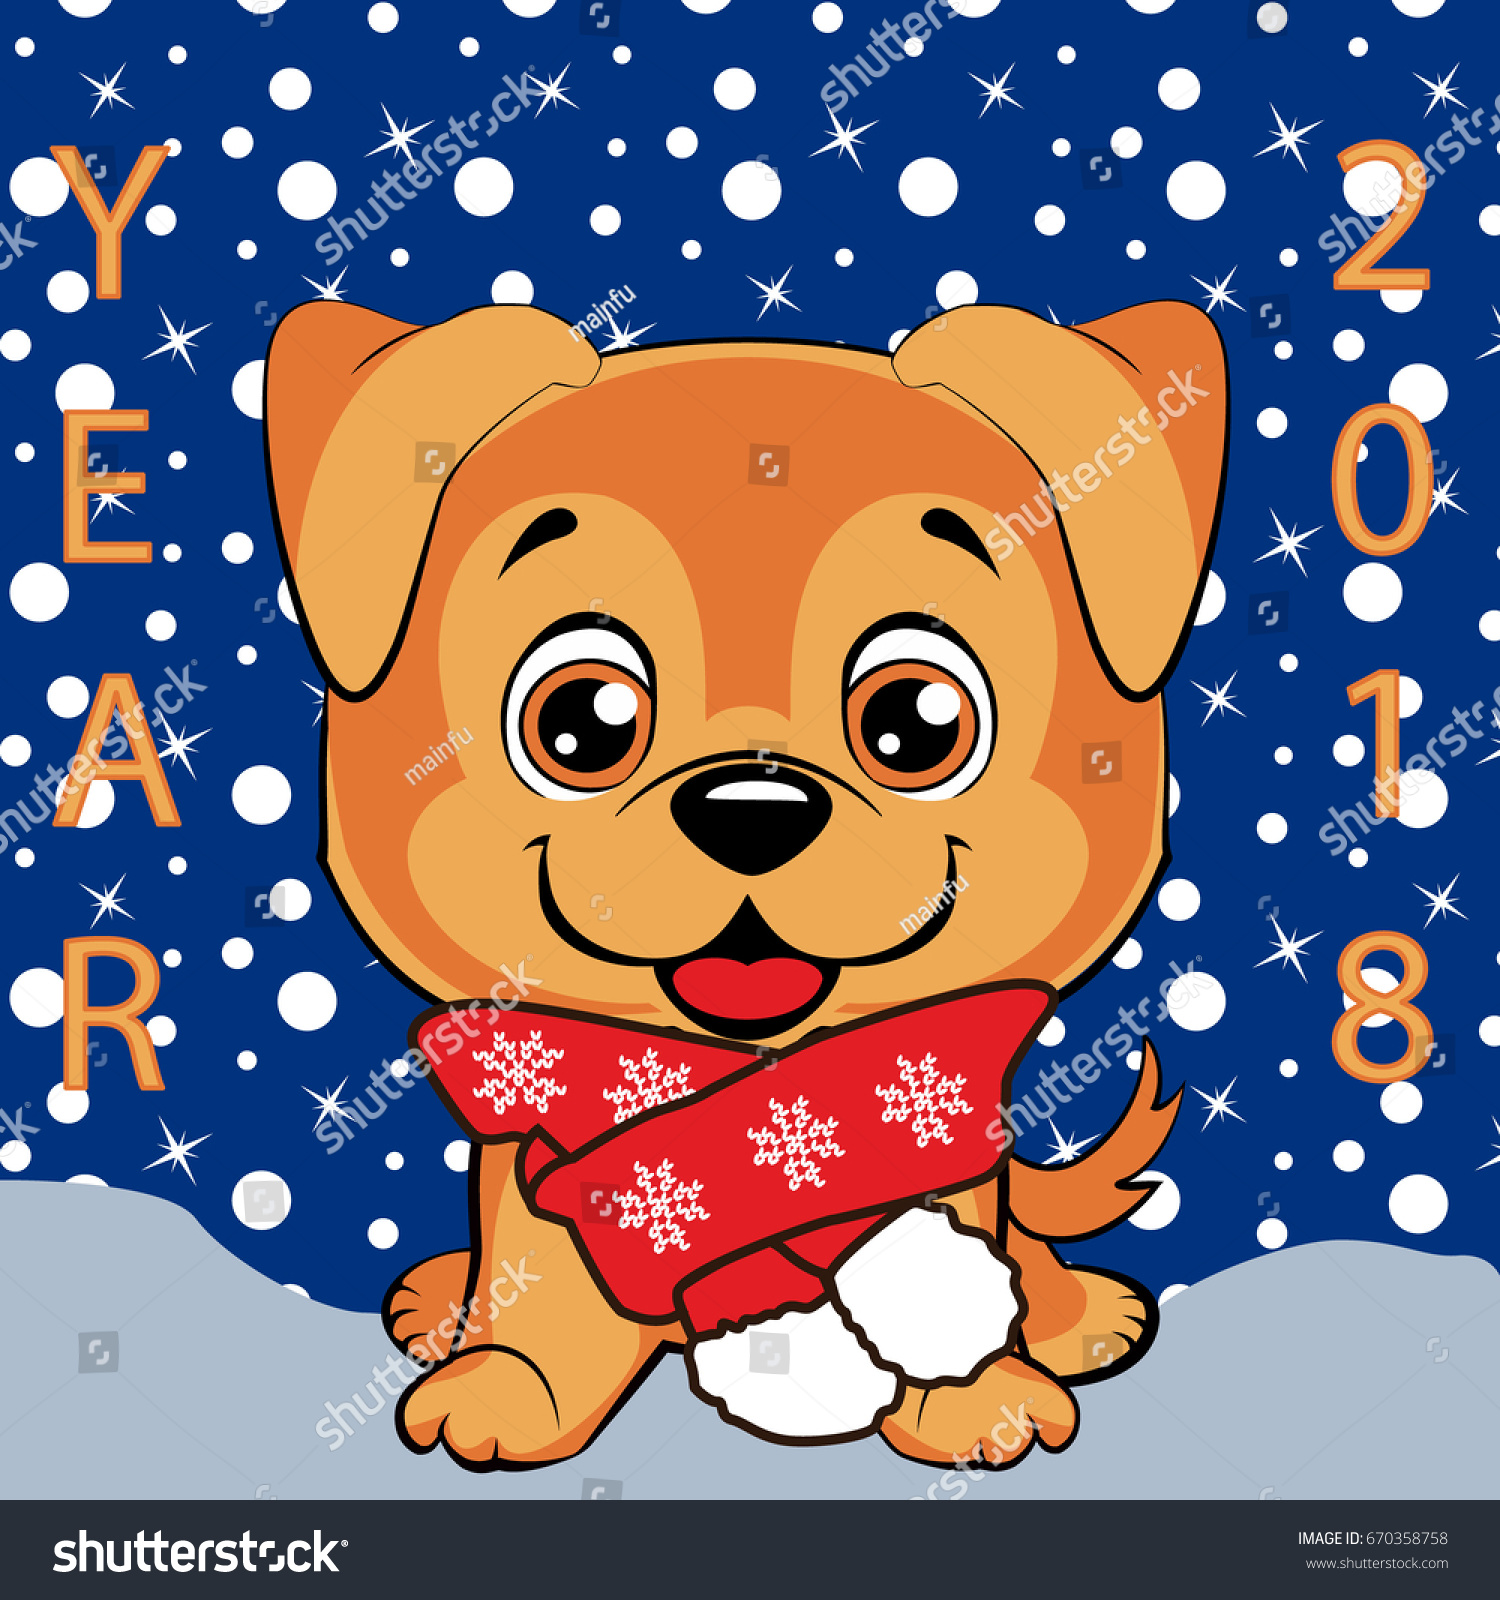 New Year 2018 Doggy Happy Dog Stock Vector 670358758 ...